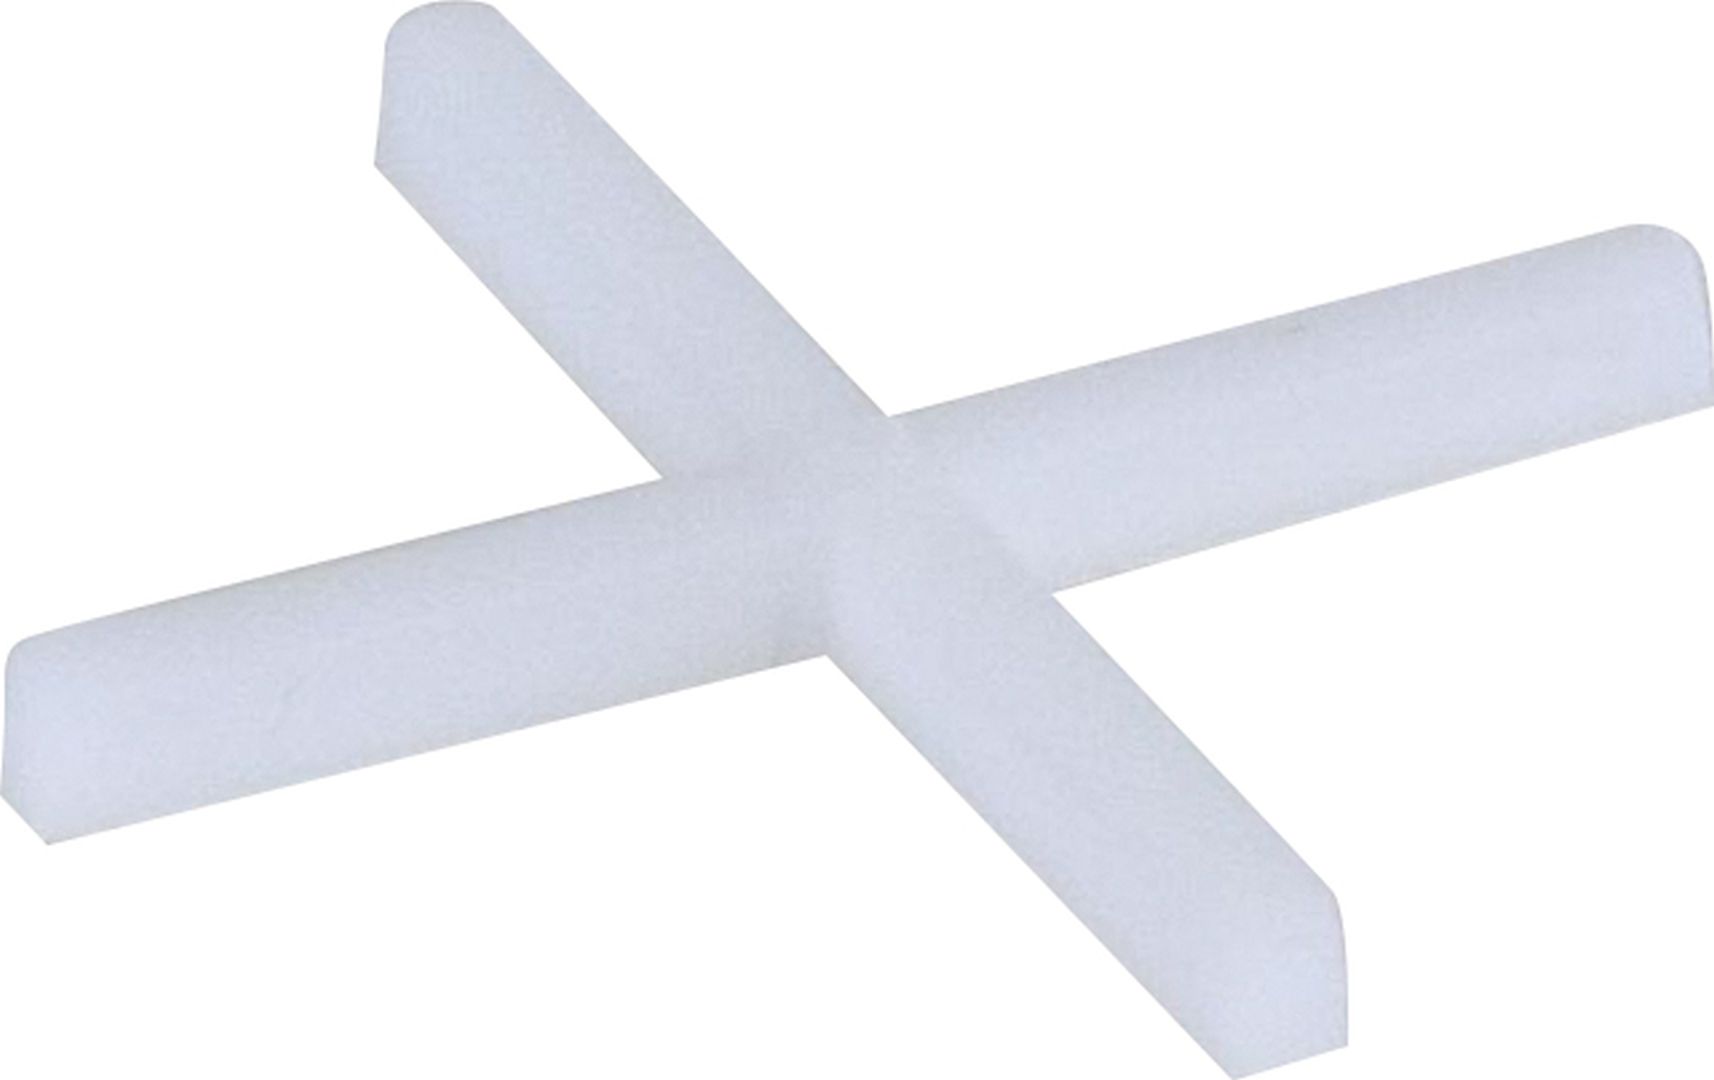 TRIUSO Fliesenkreuze aus Kunststoff, weiß, 500 Stück, 2,0 mm